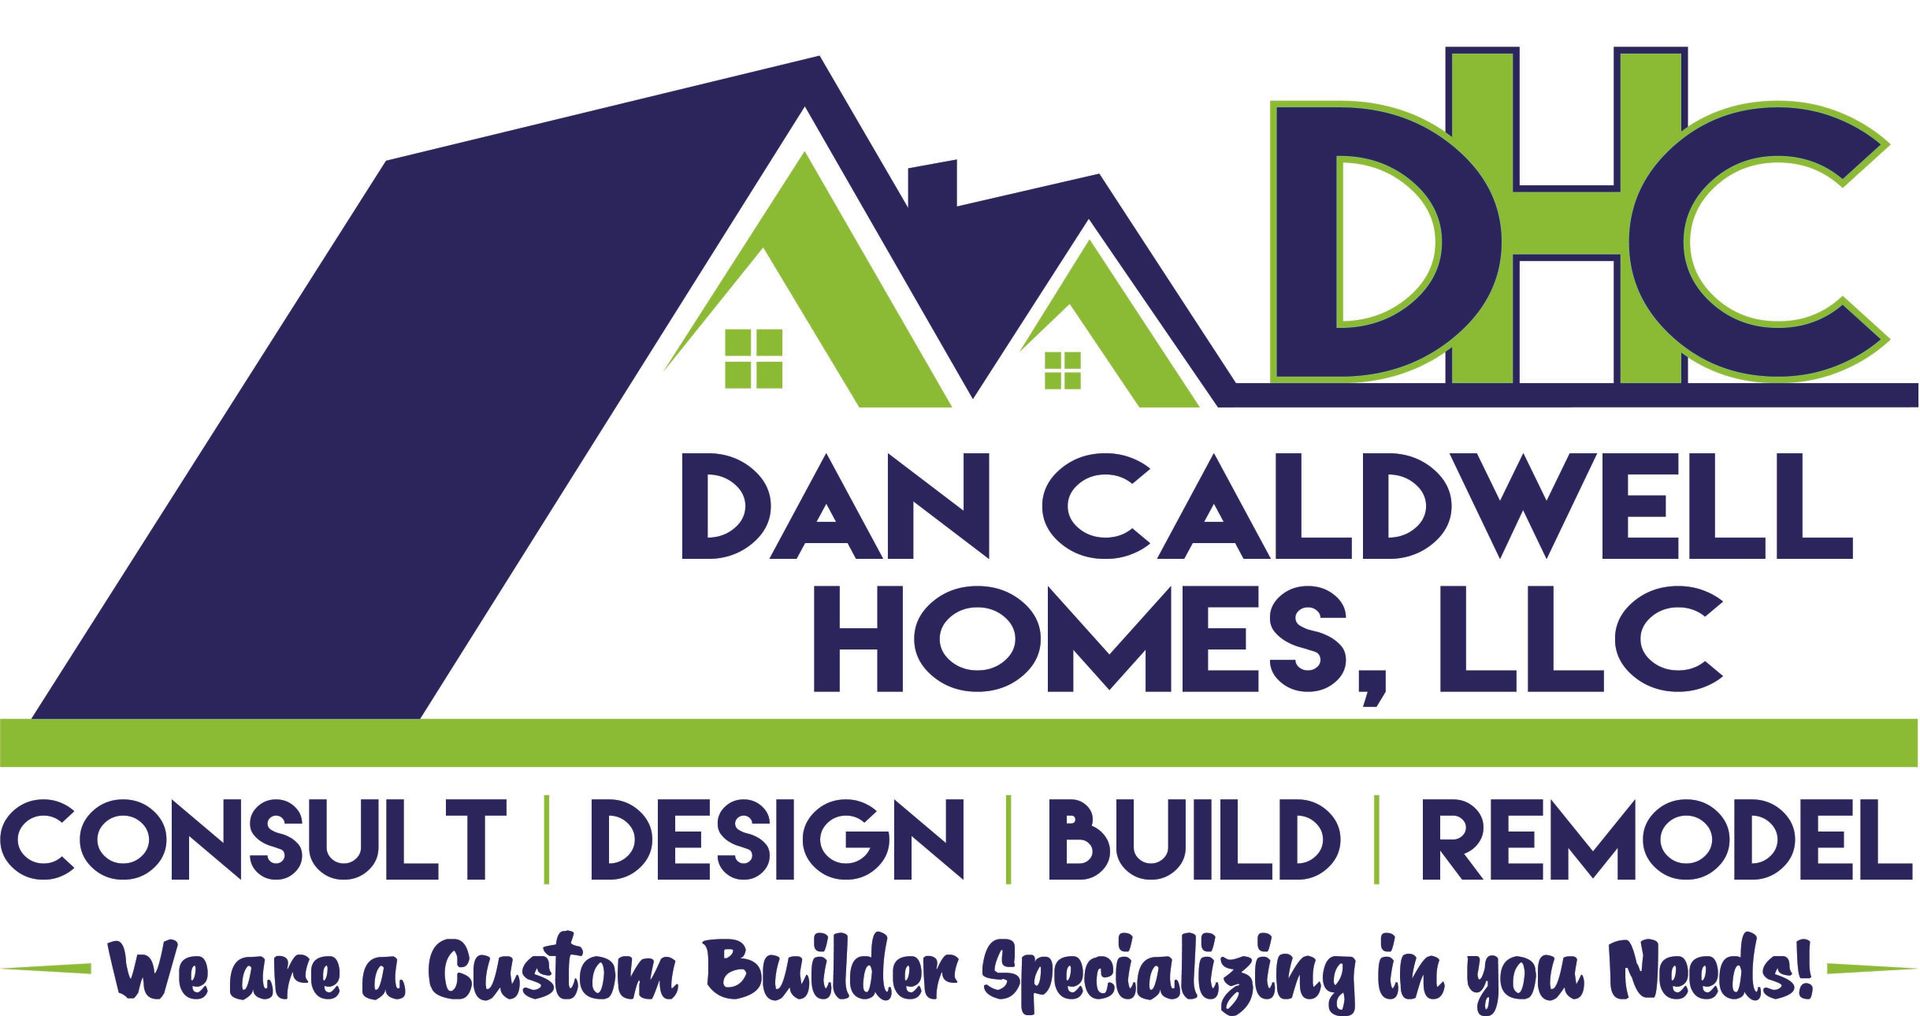 Dan Caldwell Homes, LLC.